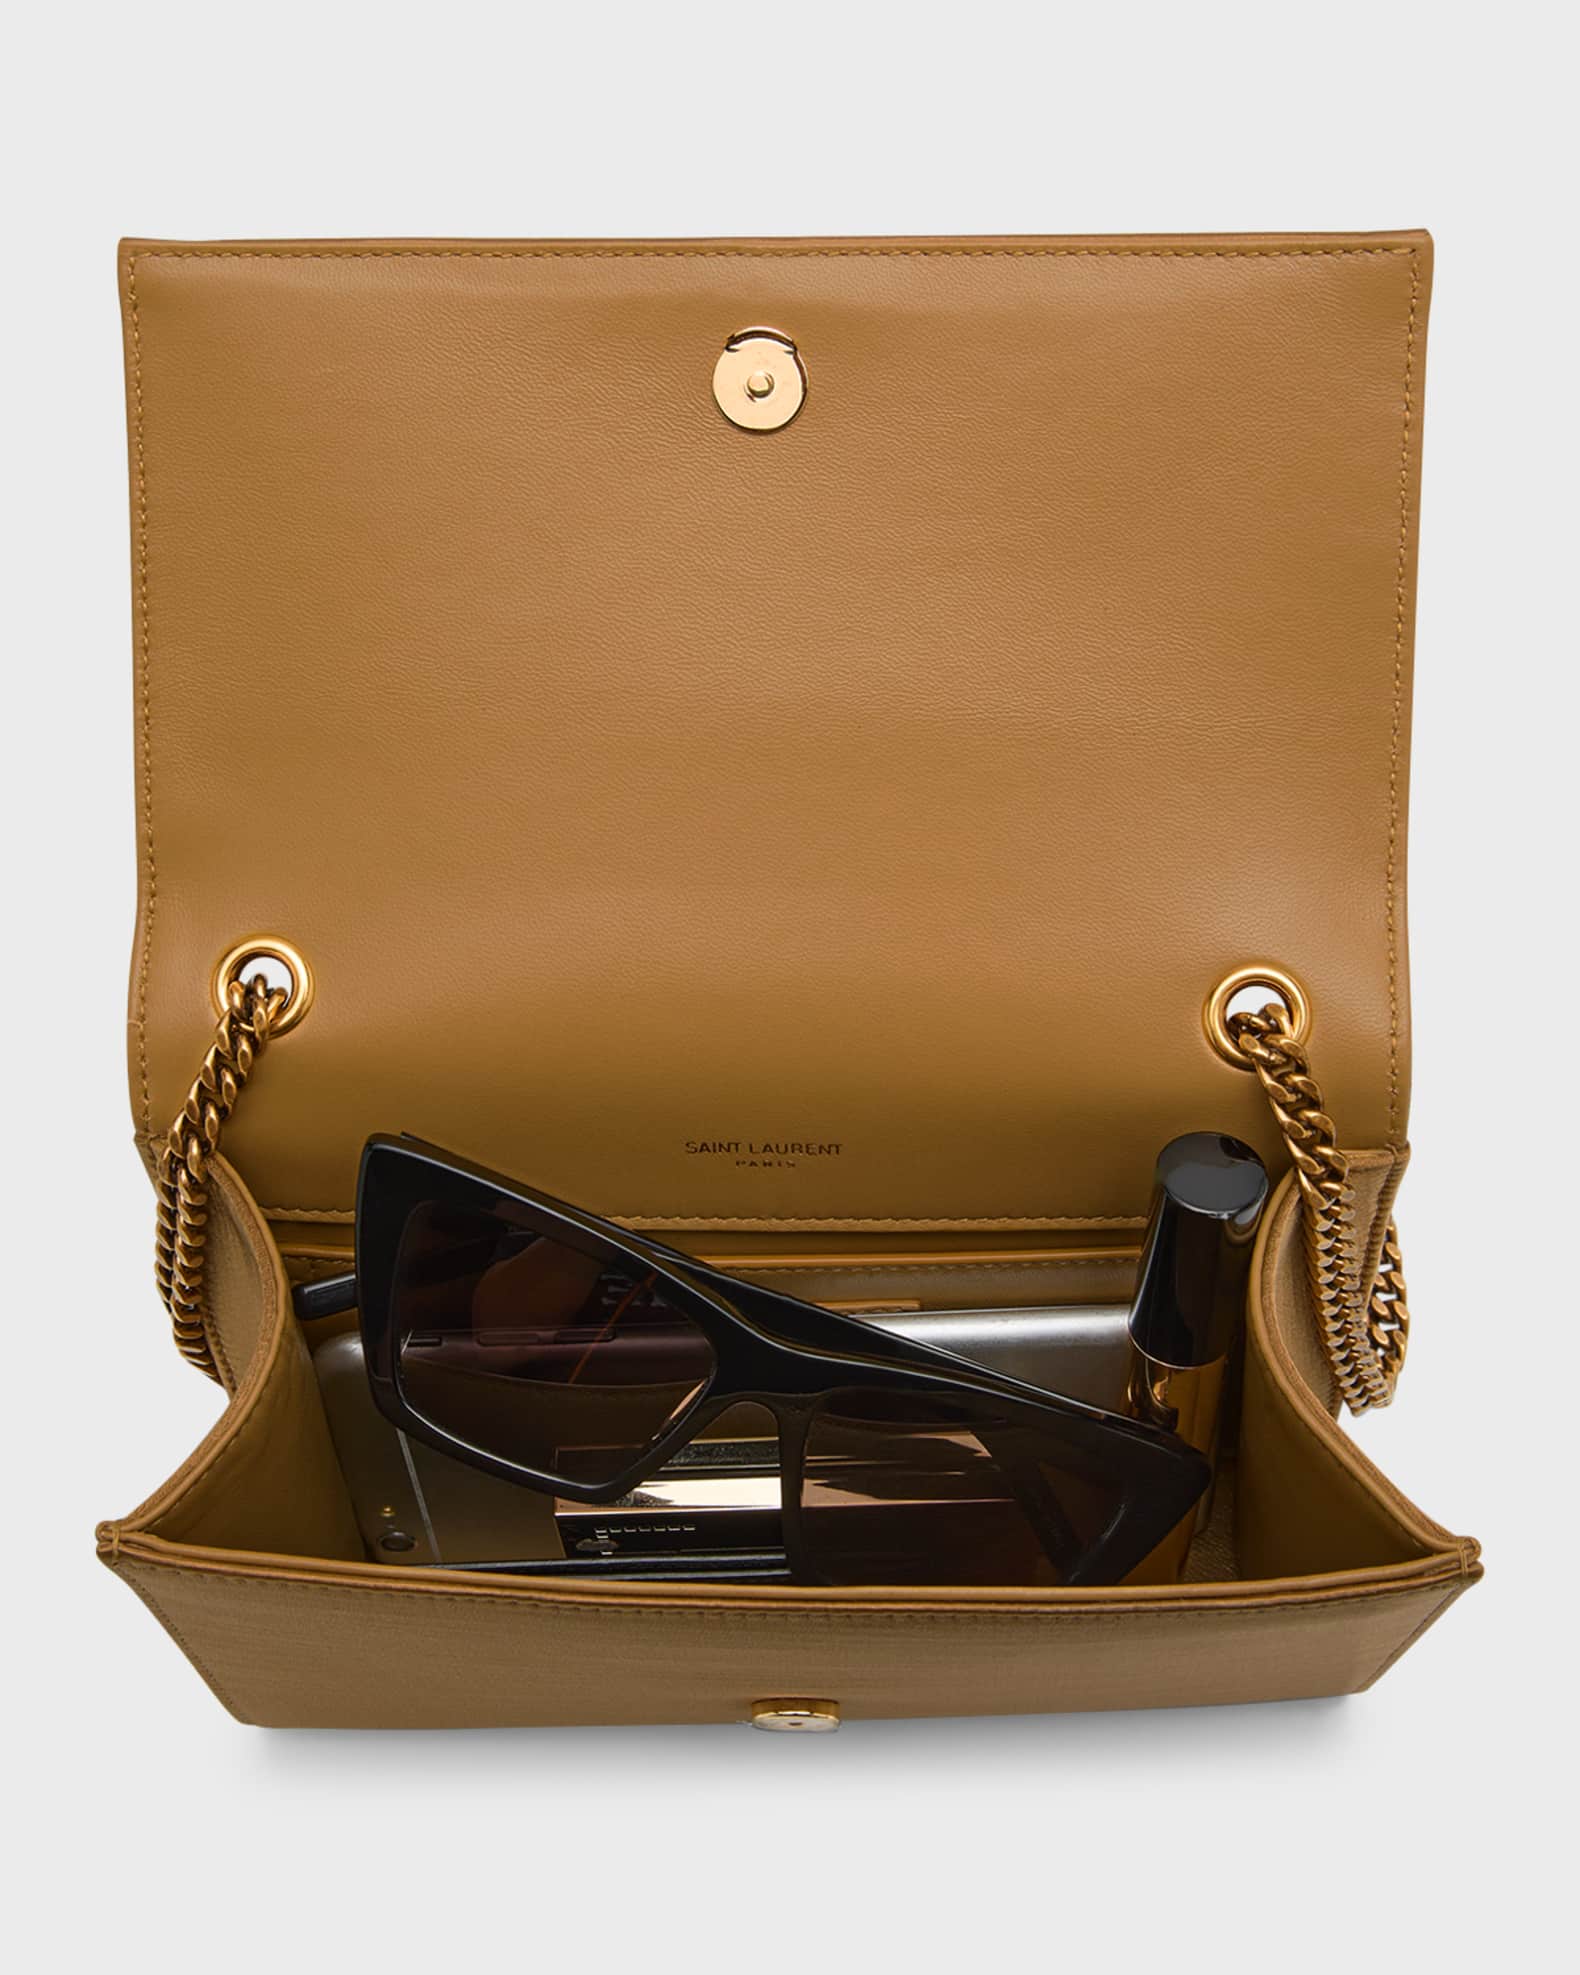 Saint Laurent 'kate Small' Shoulder Bag in Brown